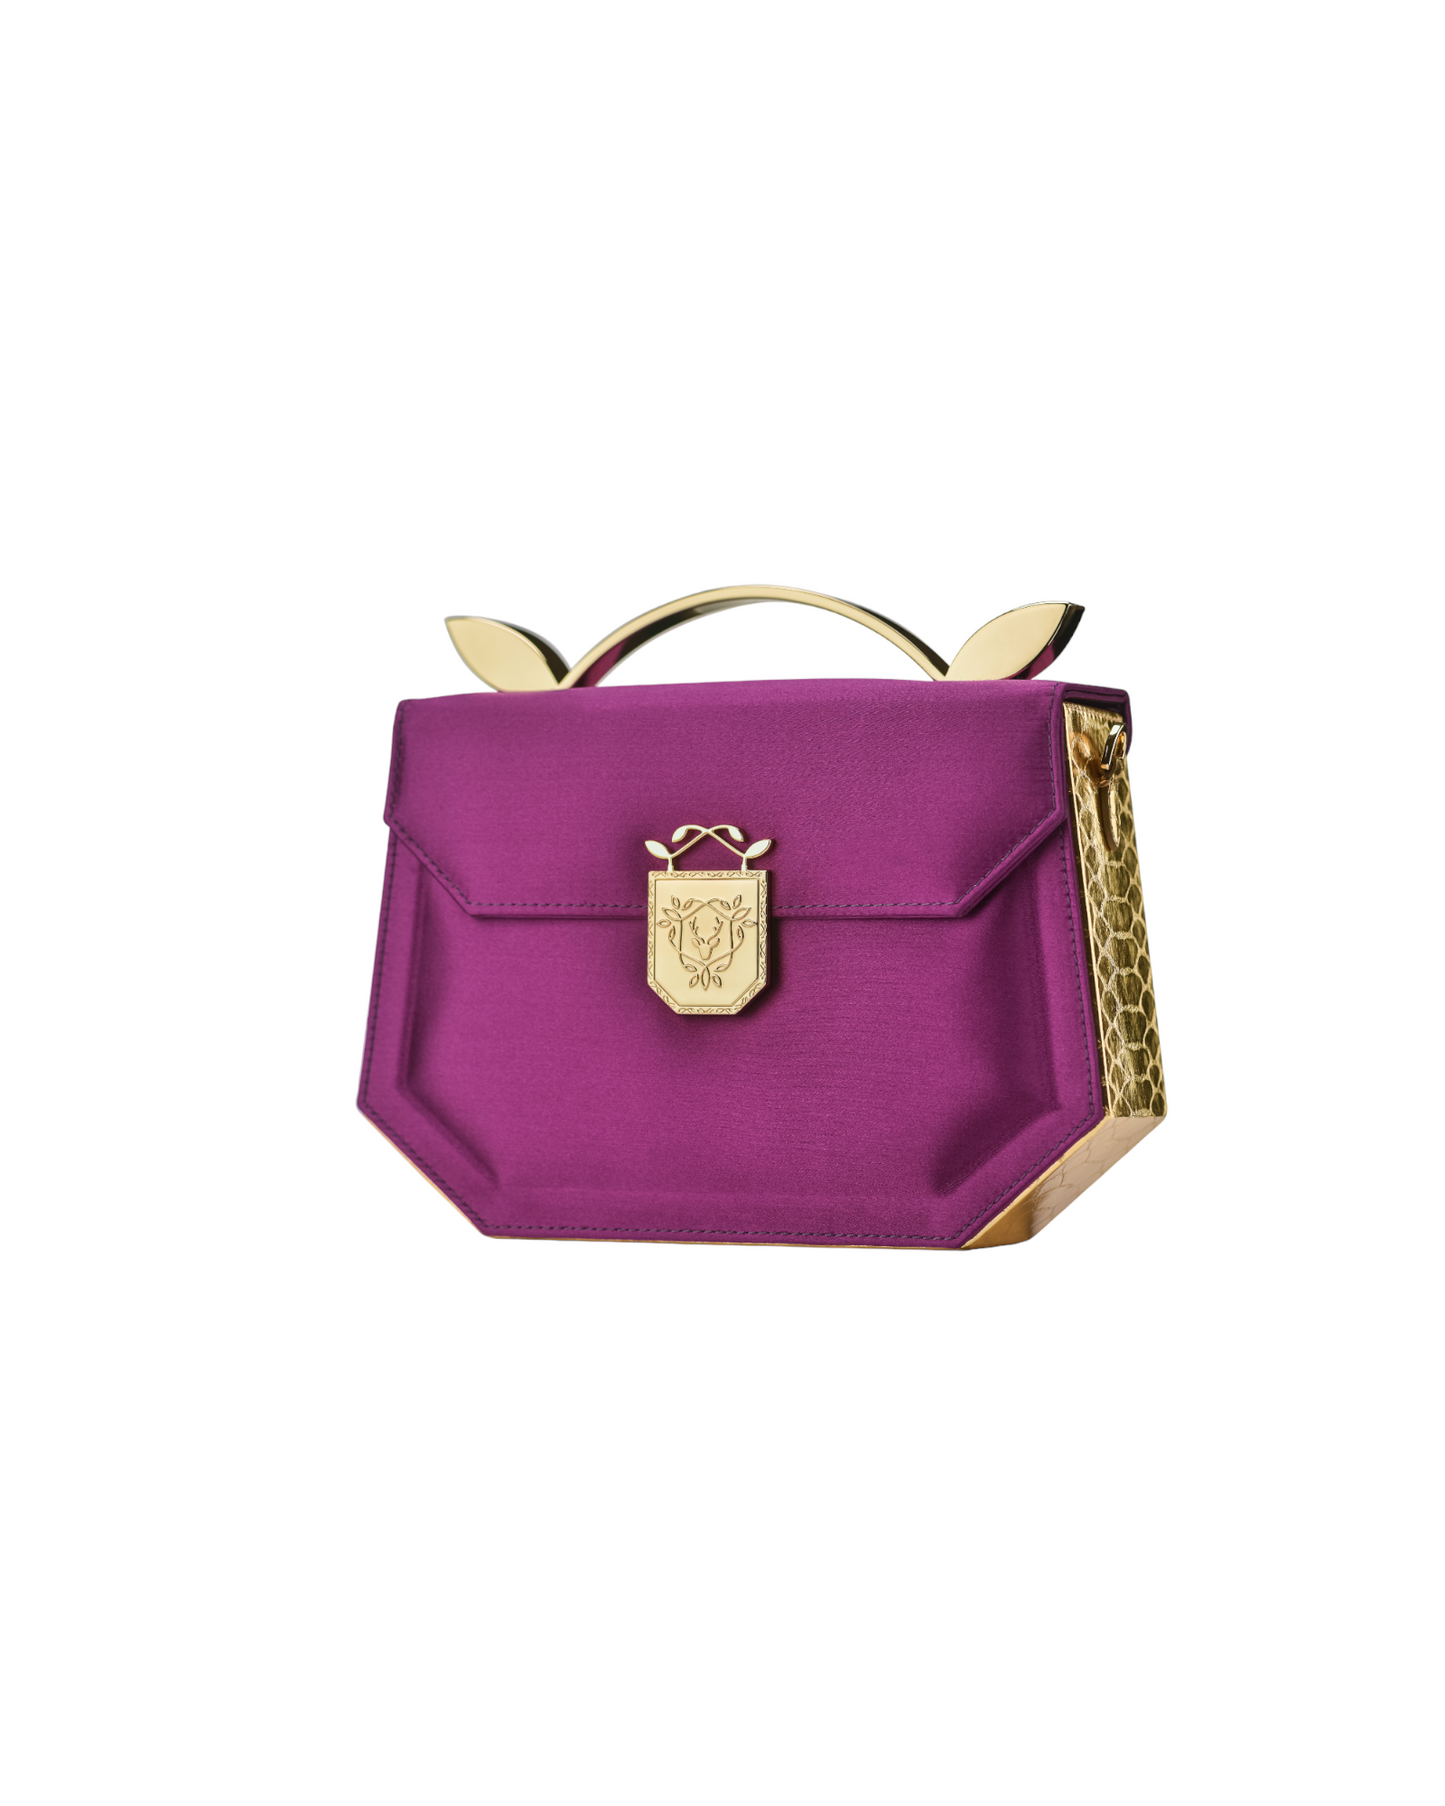 Rania Manasra Shoulder Satin Purple Bag